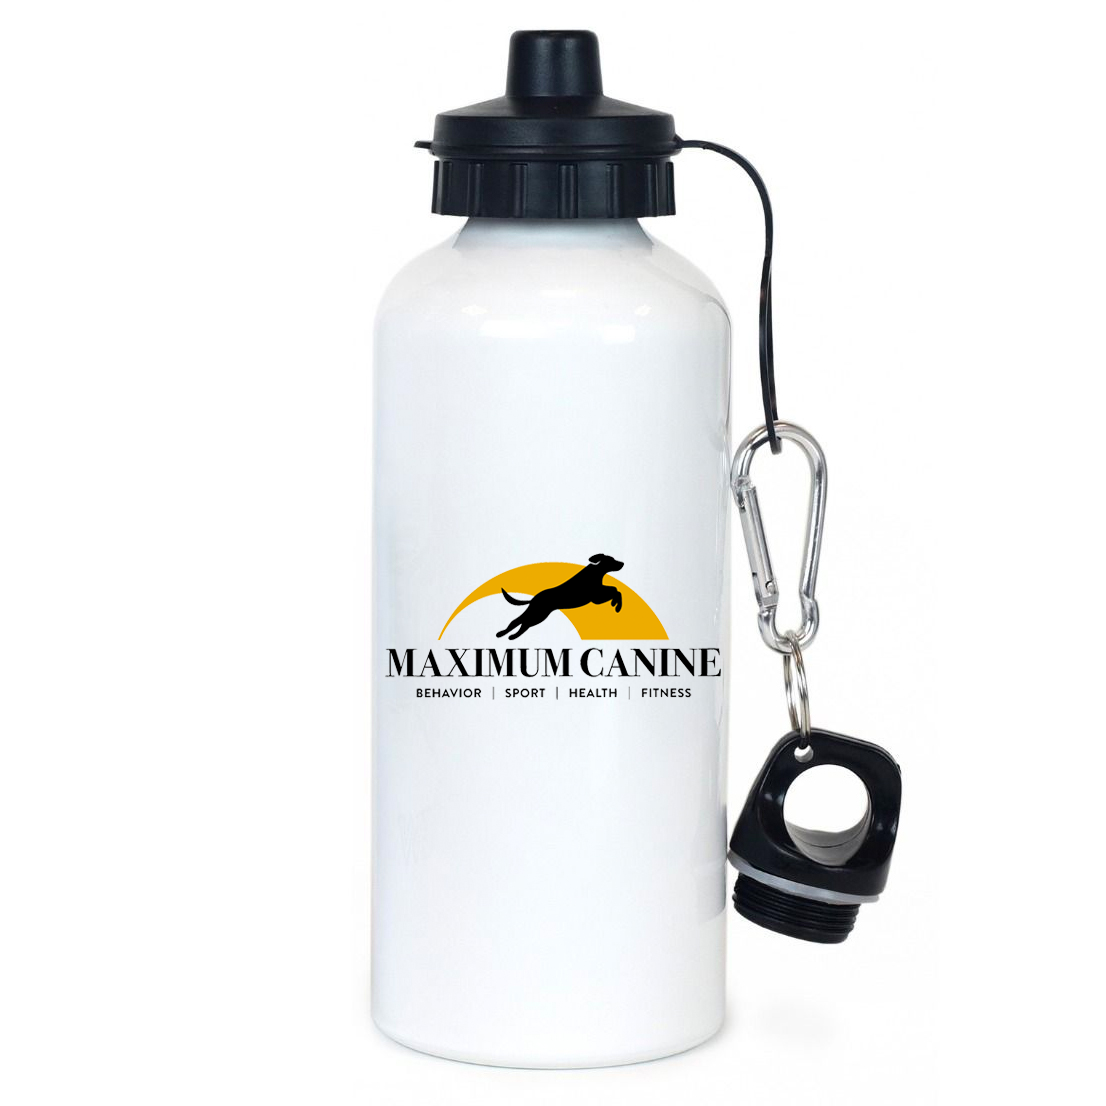 Maximum Canine Team Water Bottle